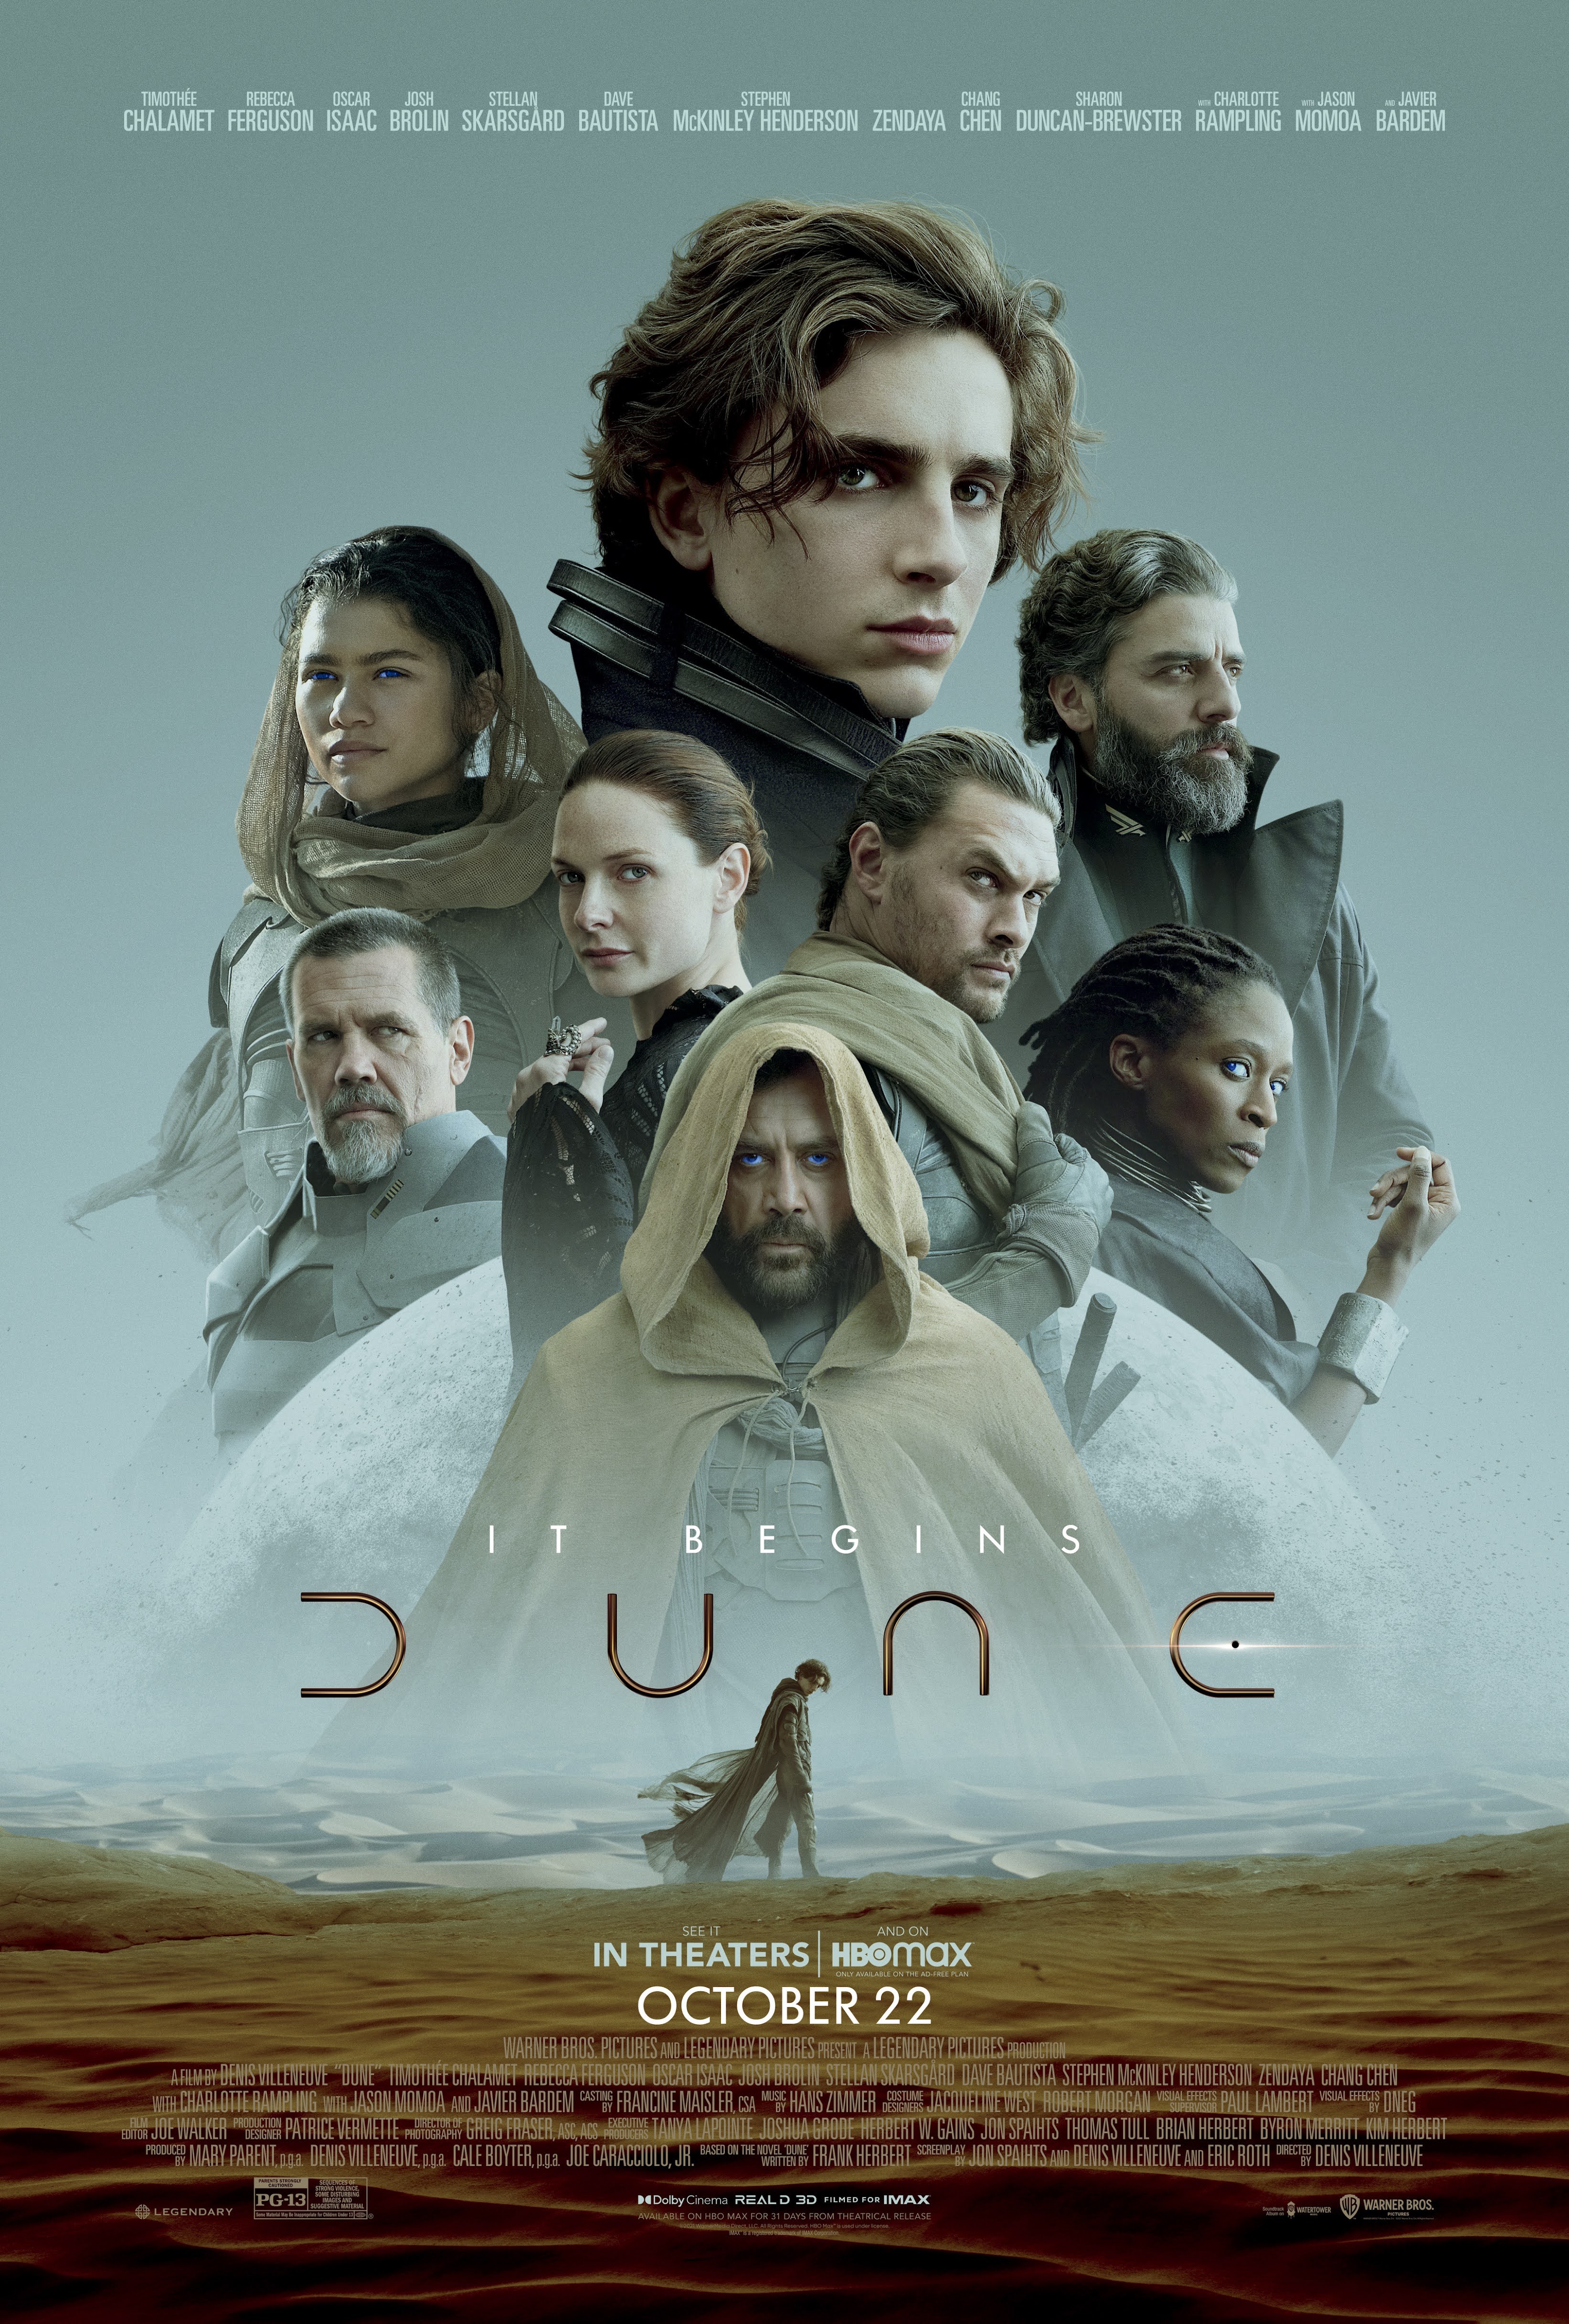 Dune (film) Warner Bros photo